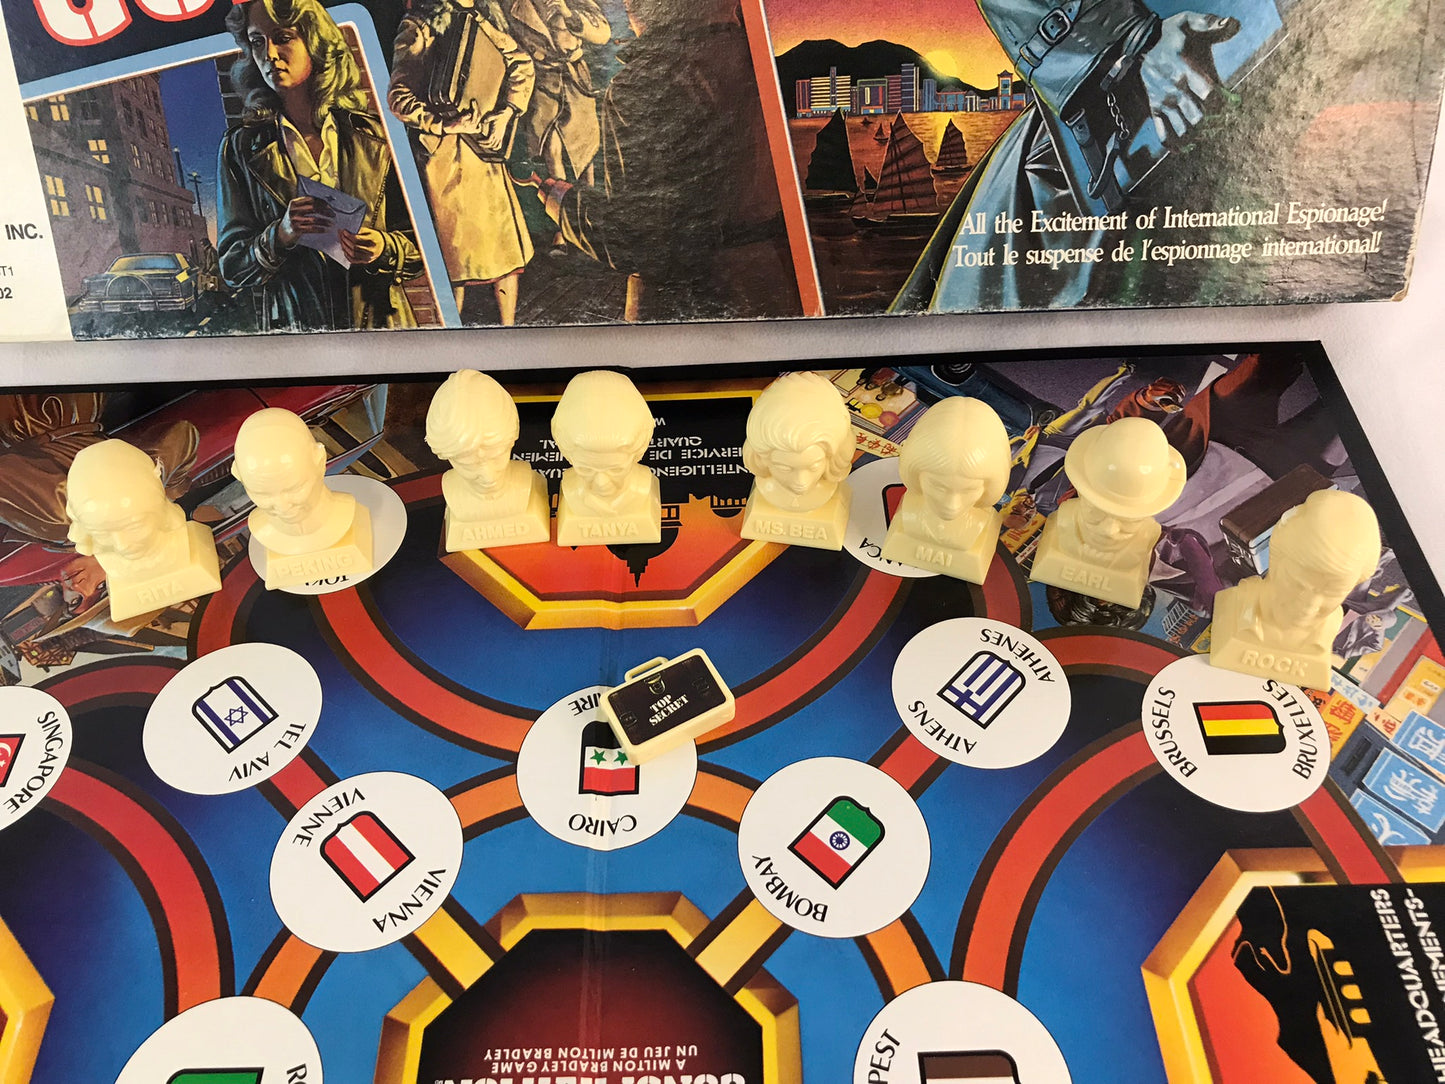 Game 1983 Vintage Milton Bradley Conspiracy Complete RARE